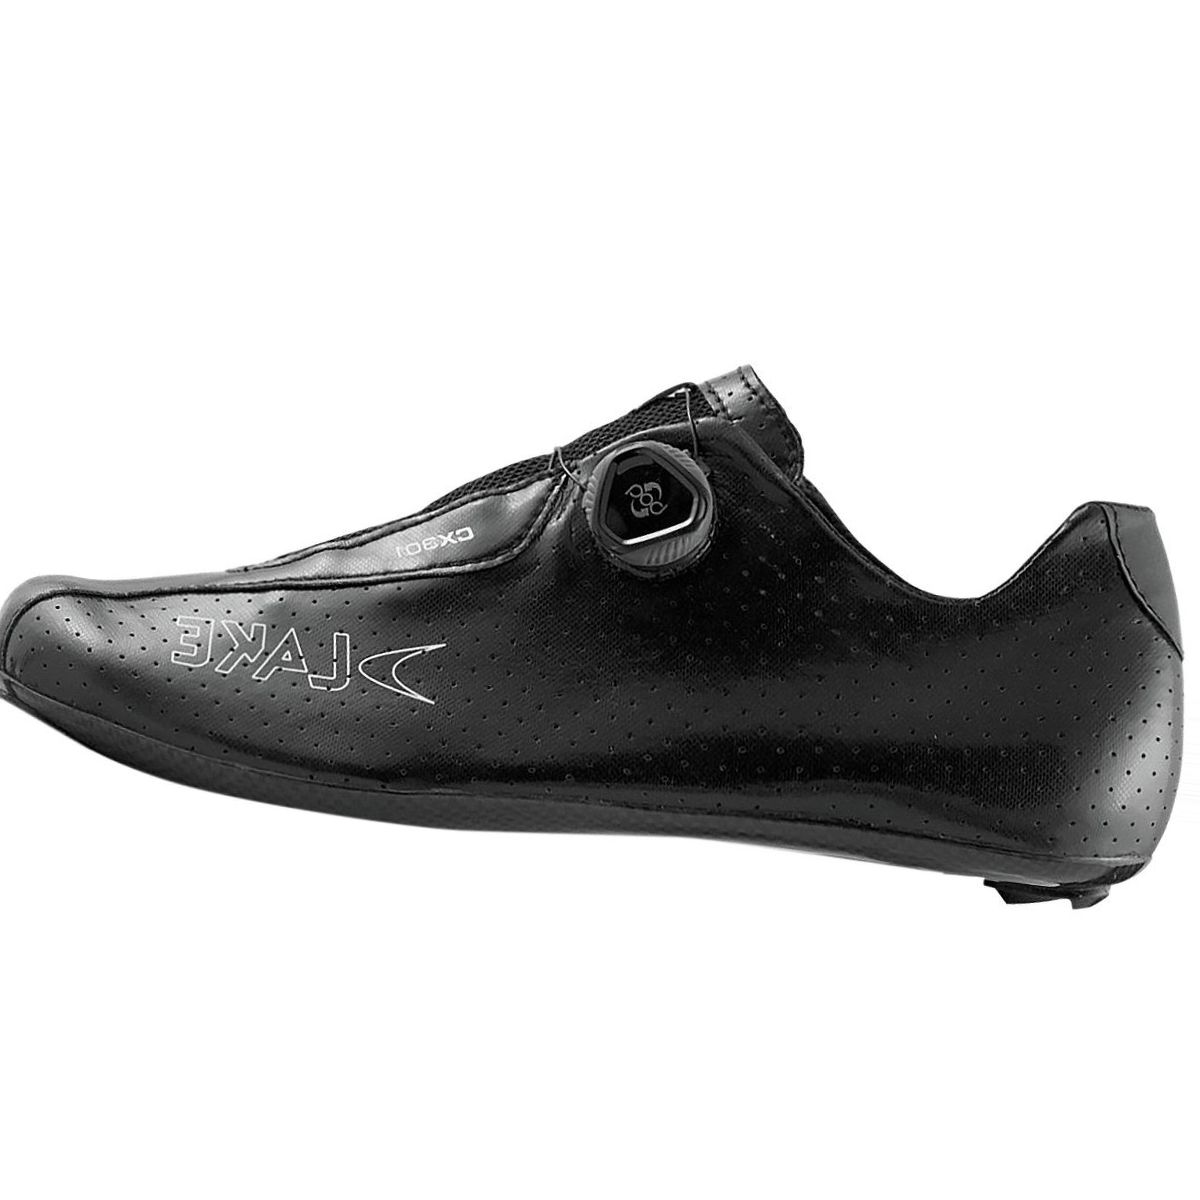 Lake CX301 Xtra Wide Cycling Shoe - Men's